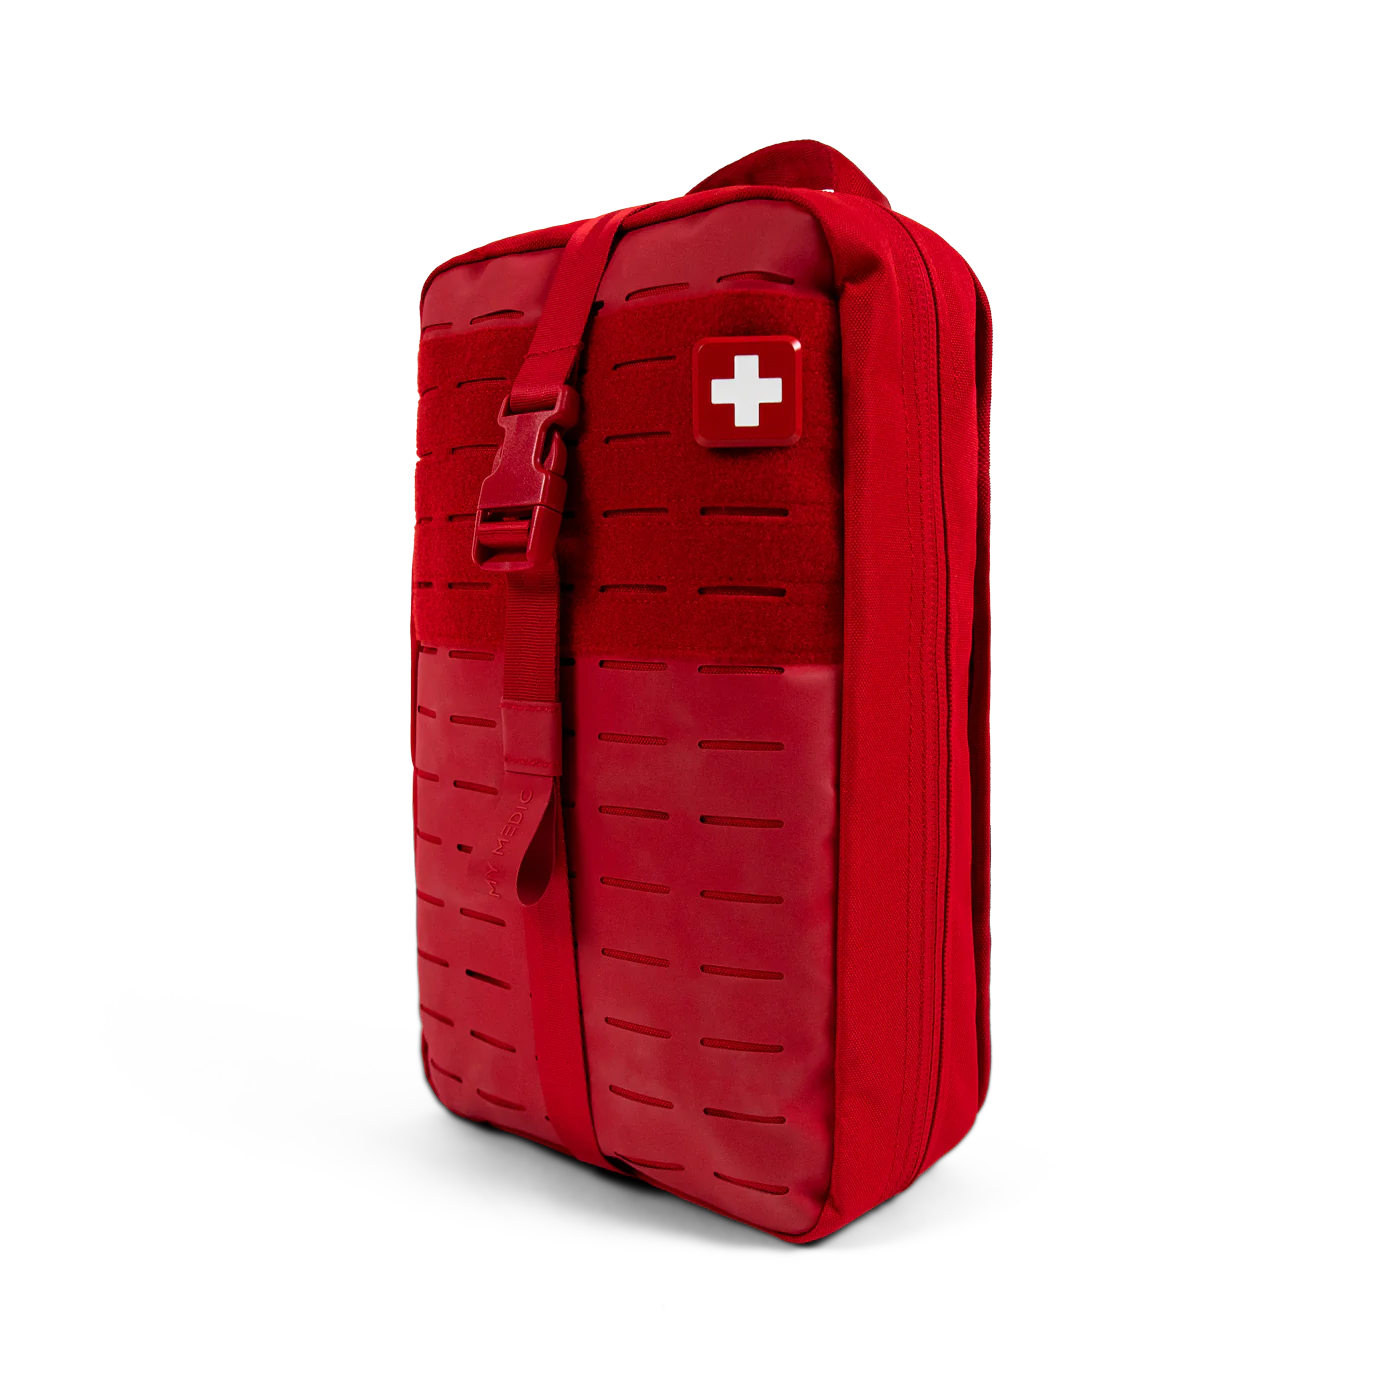 MyFAK Large Standard First Aid Kits